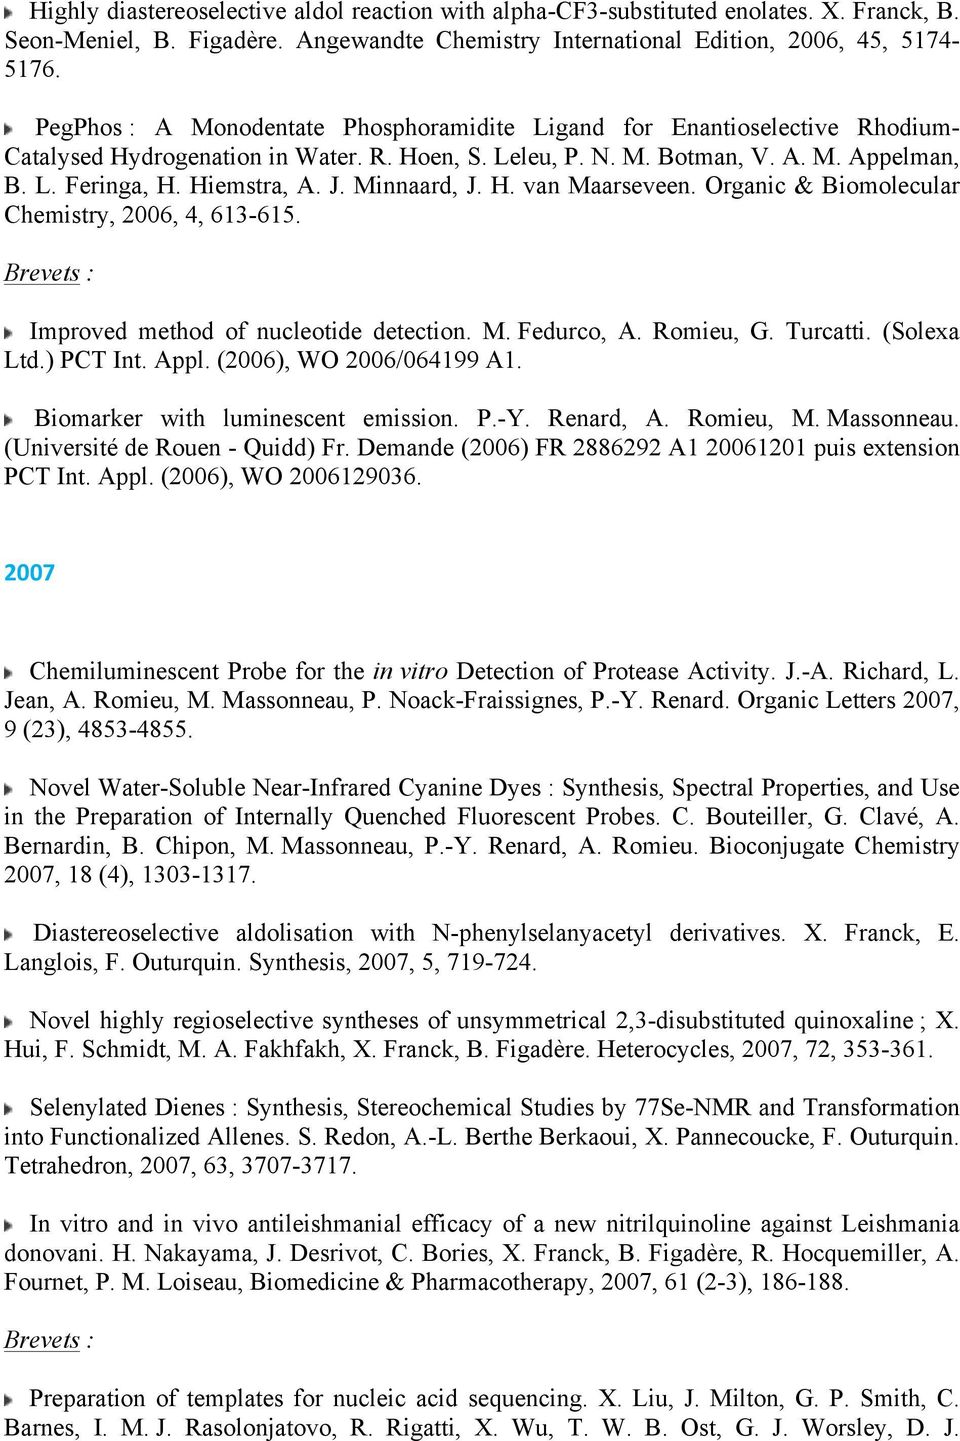 Minnaard, J. H. van Maarseveen. Organic & Biomolecular Chemistry, 2006, 4, 613-615. Brevets : Improved method of nucleotide detection. M. Fedurco, A. Romieu, G. Turcatti. (Solexa Ltd.) PCT Int. Appl.